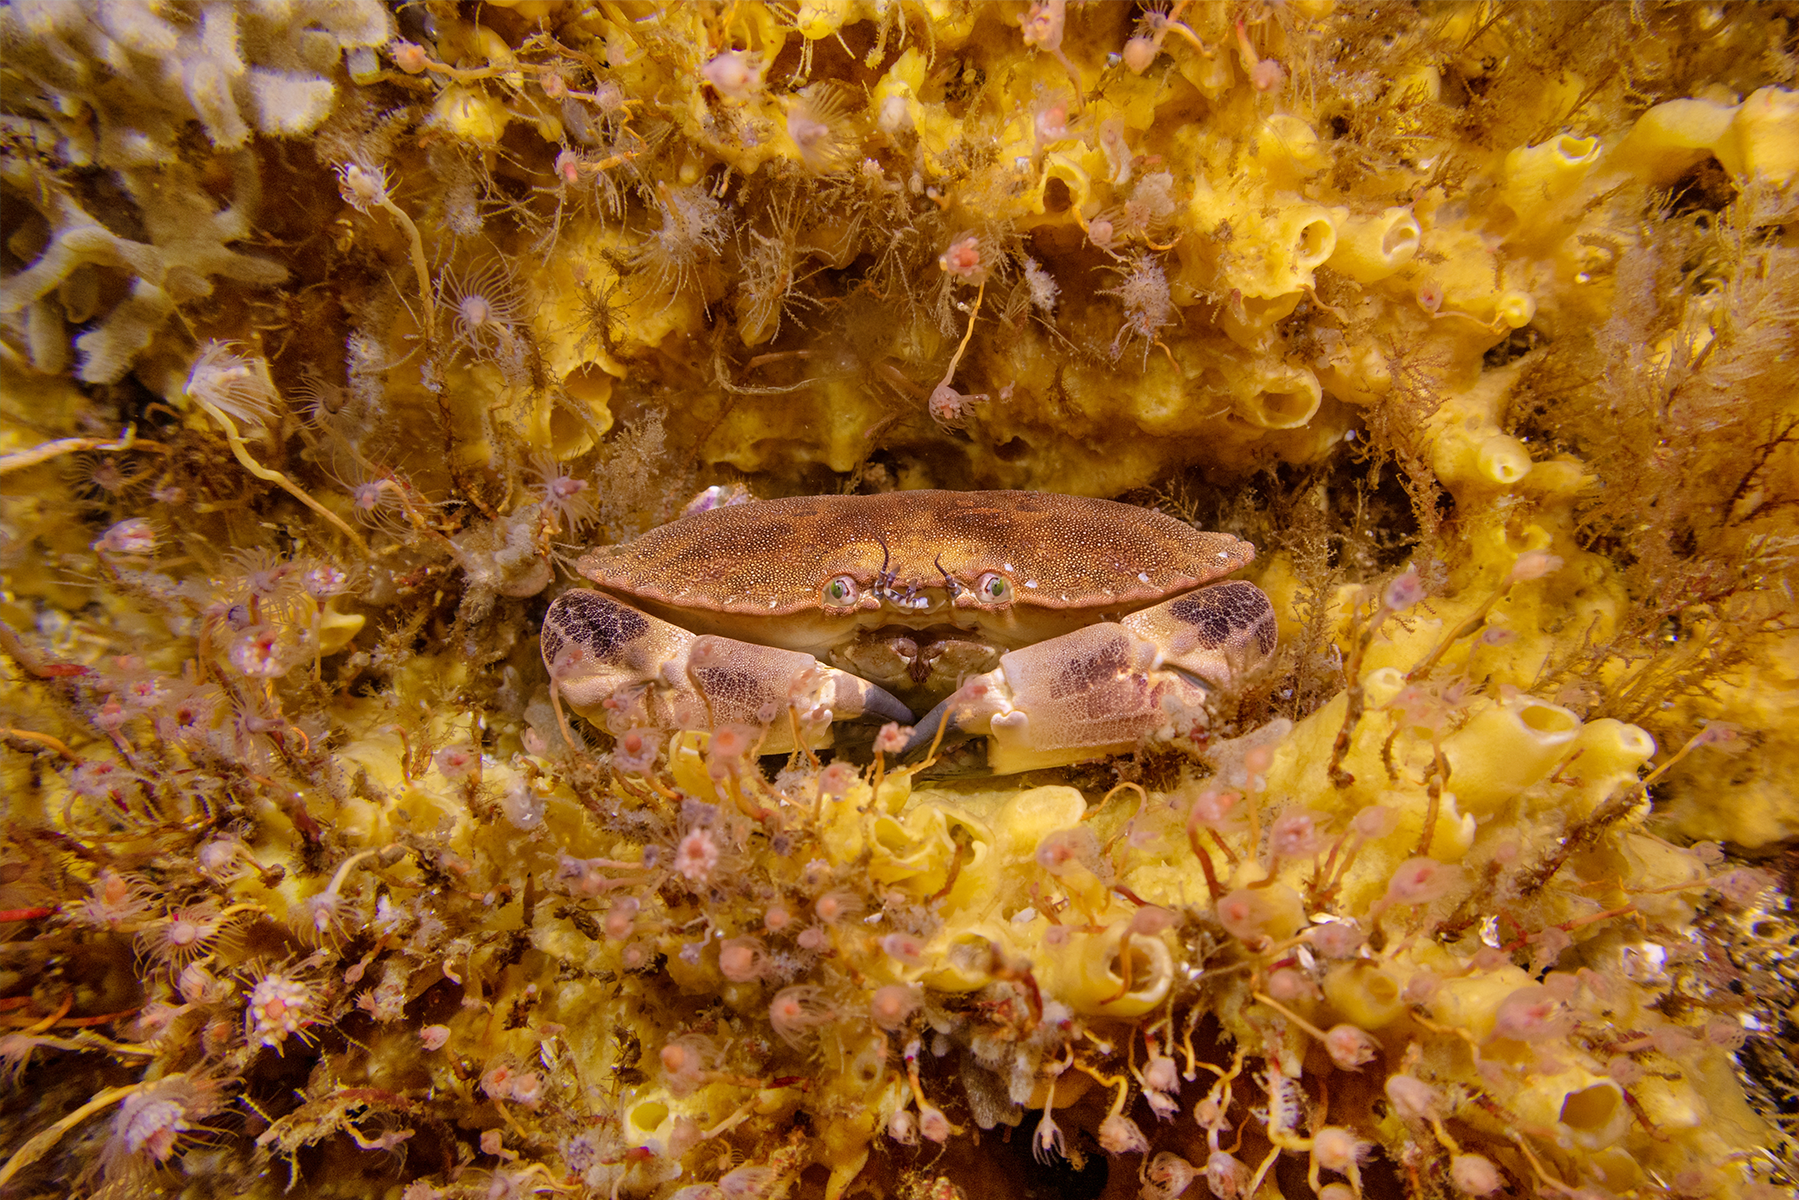 James Lynott – Brown Crab